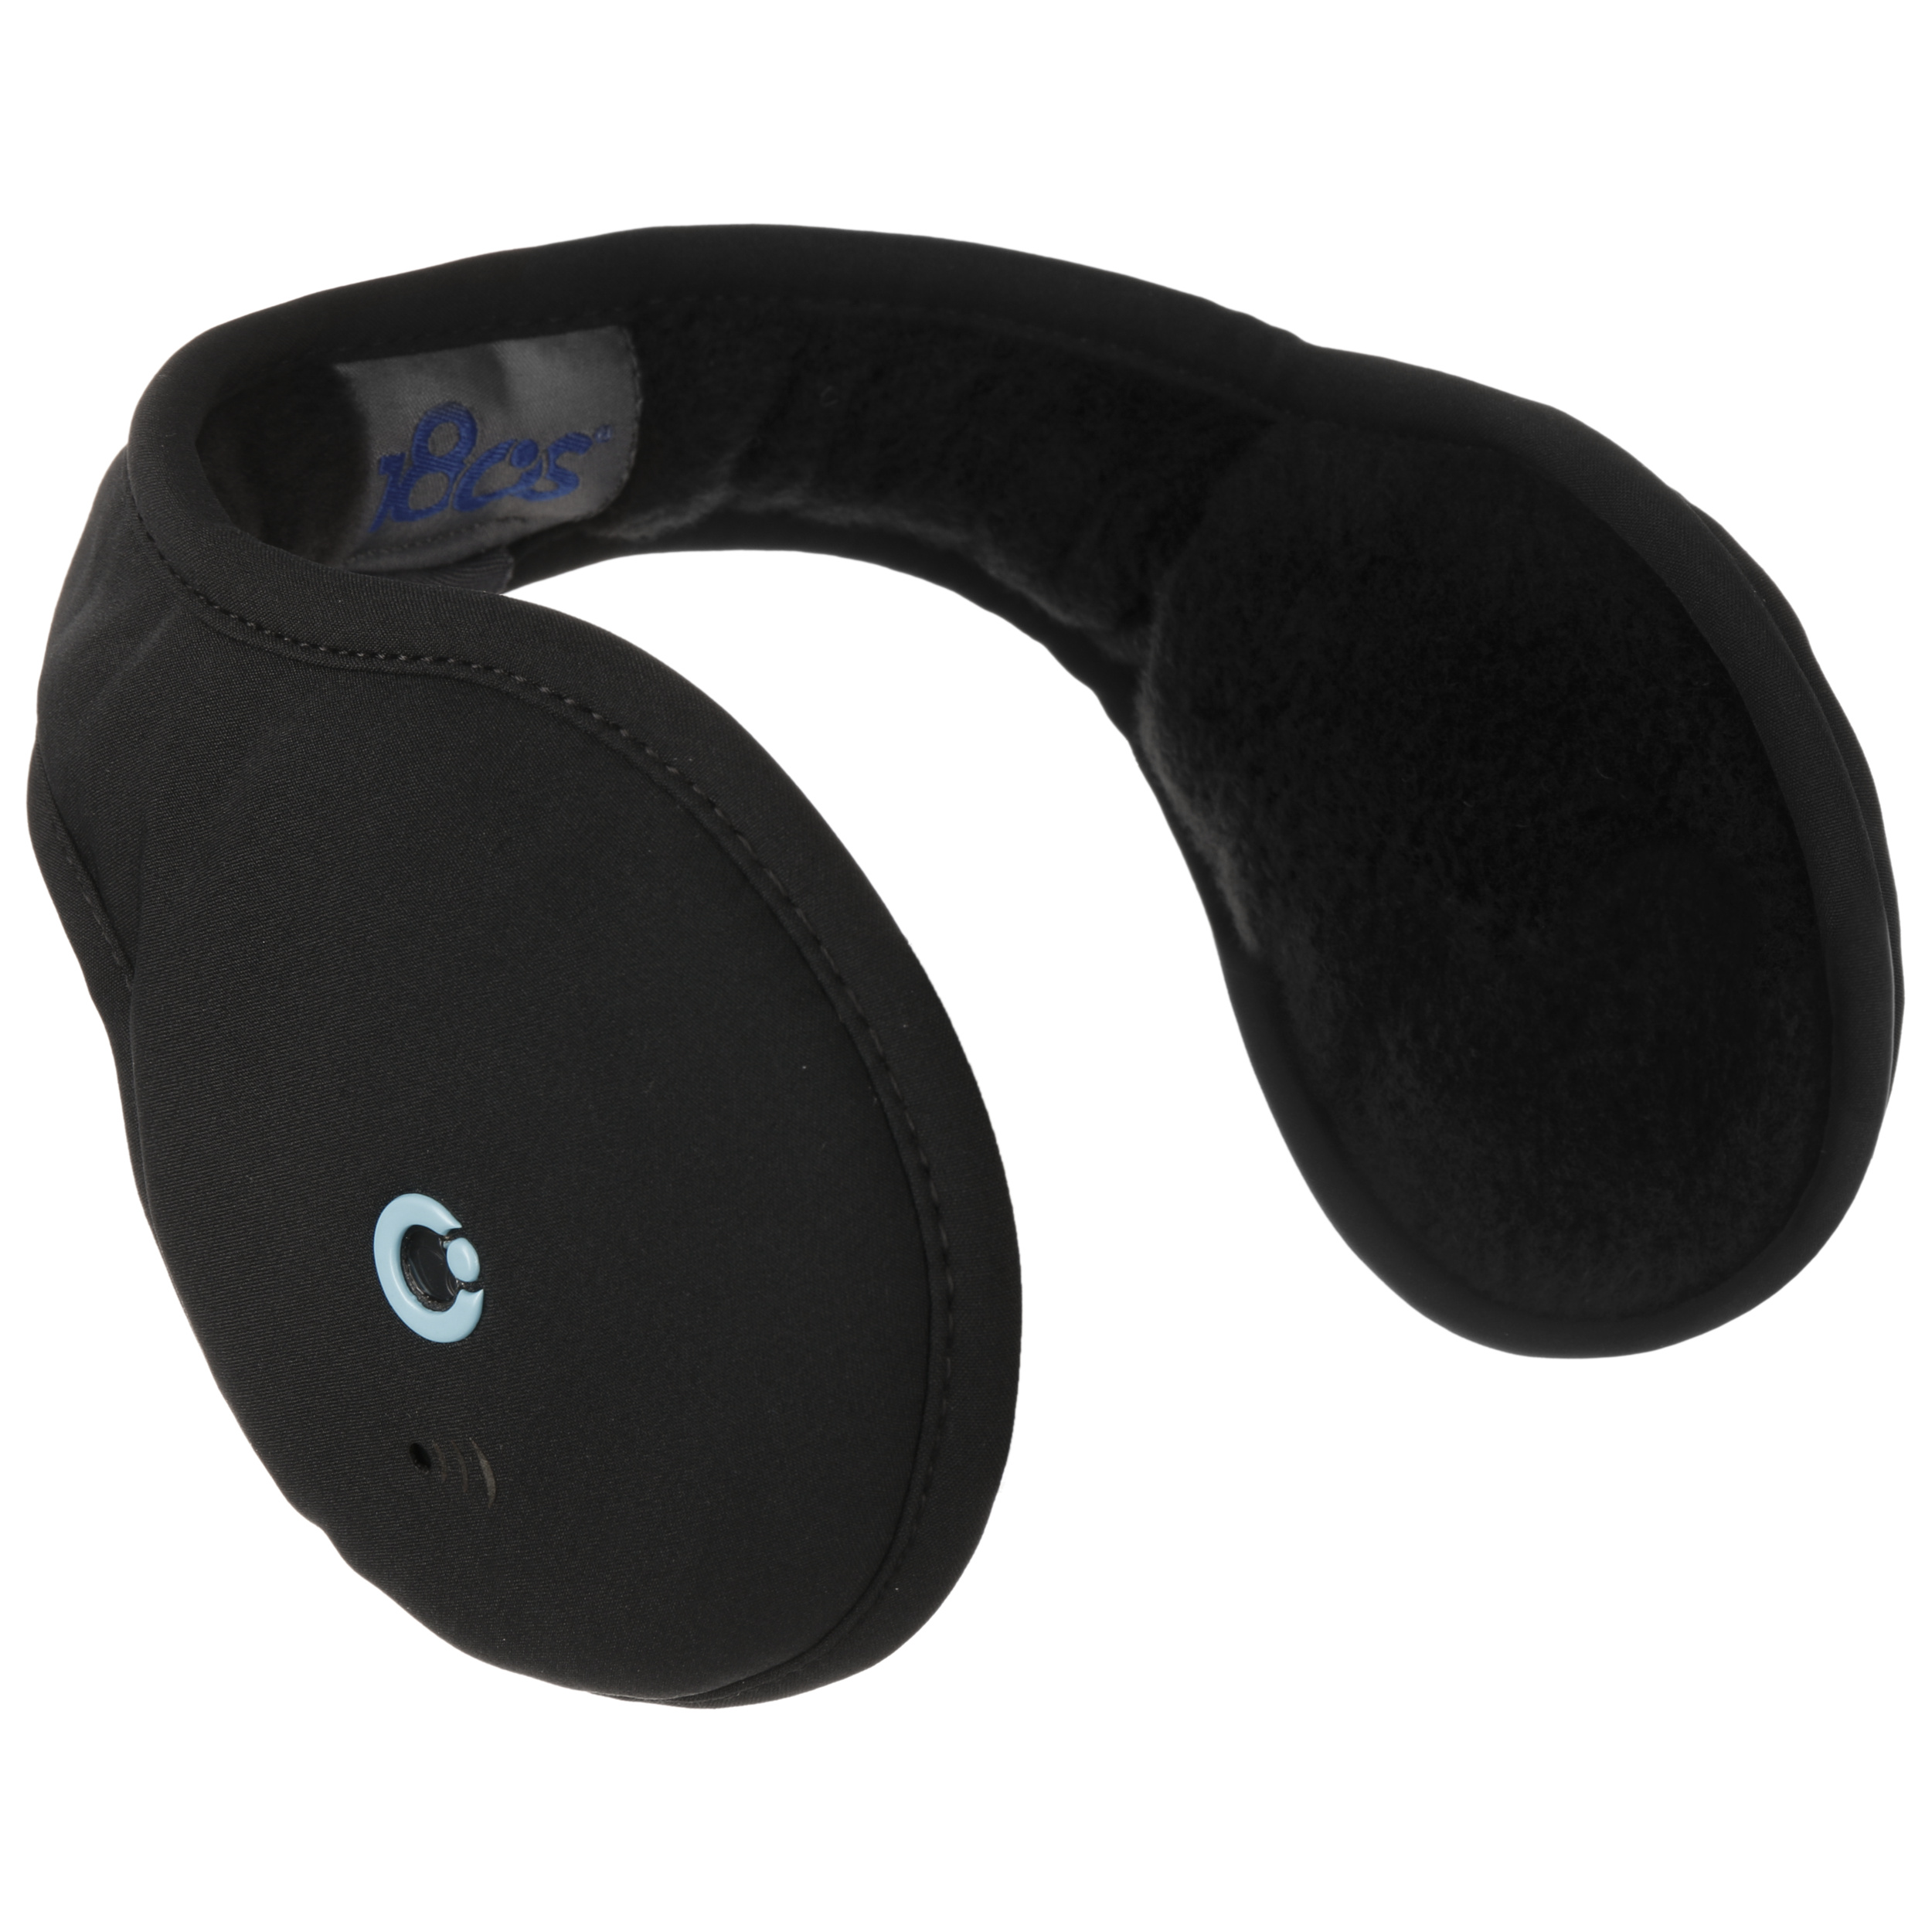 180s Bluetooth II Ear Warmer Head Phone 